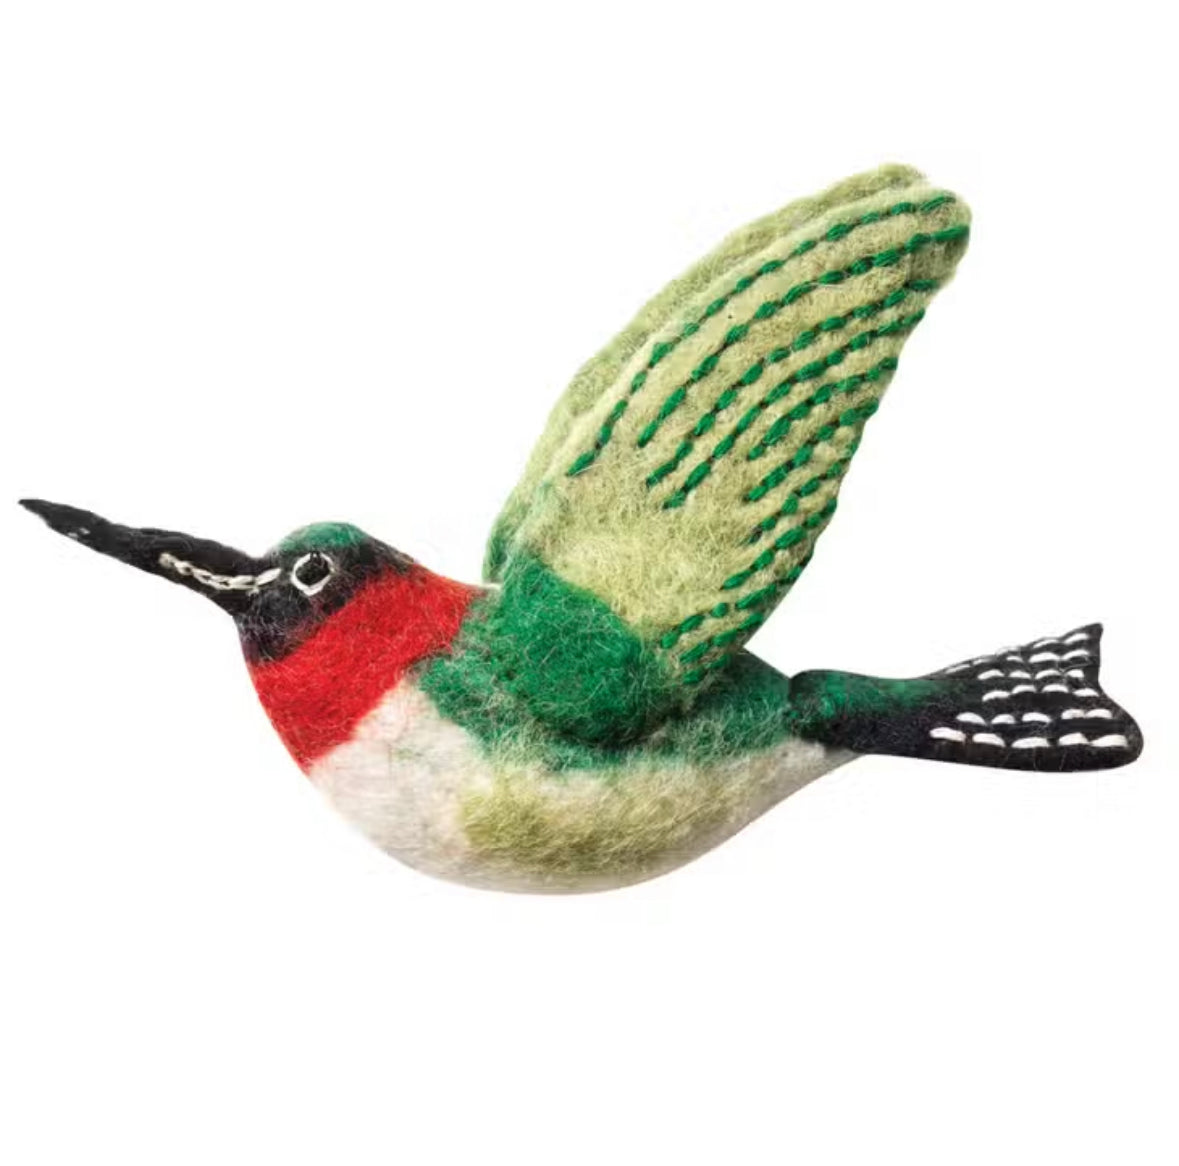 Felt bird Christmas ornaments — The Ornament Boutique